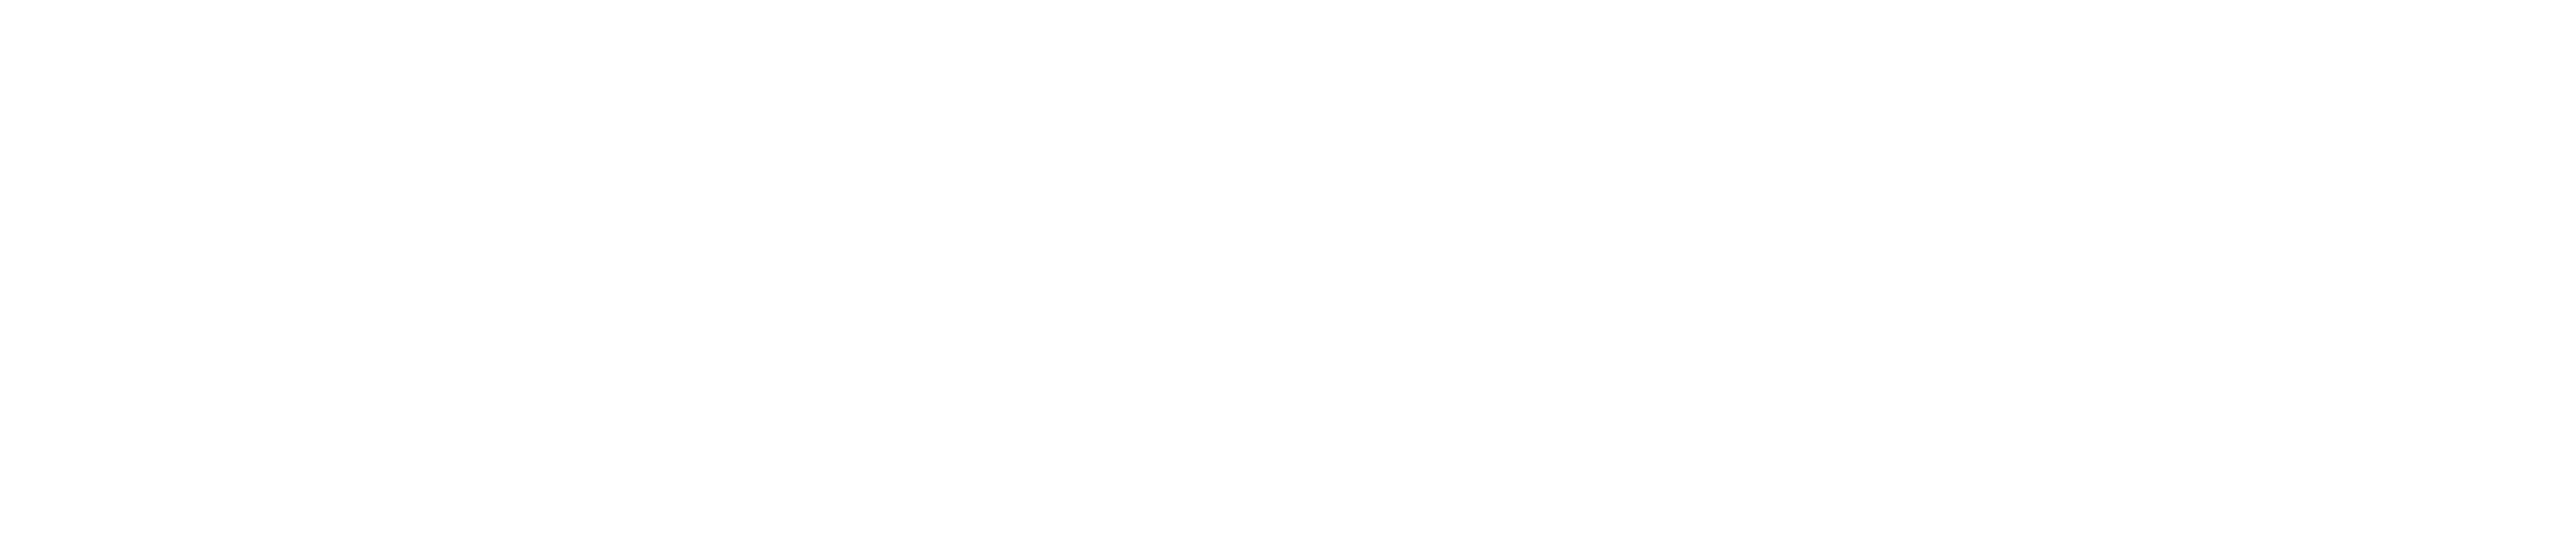 ducklife-logo-white